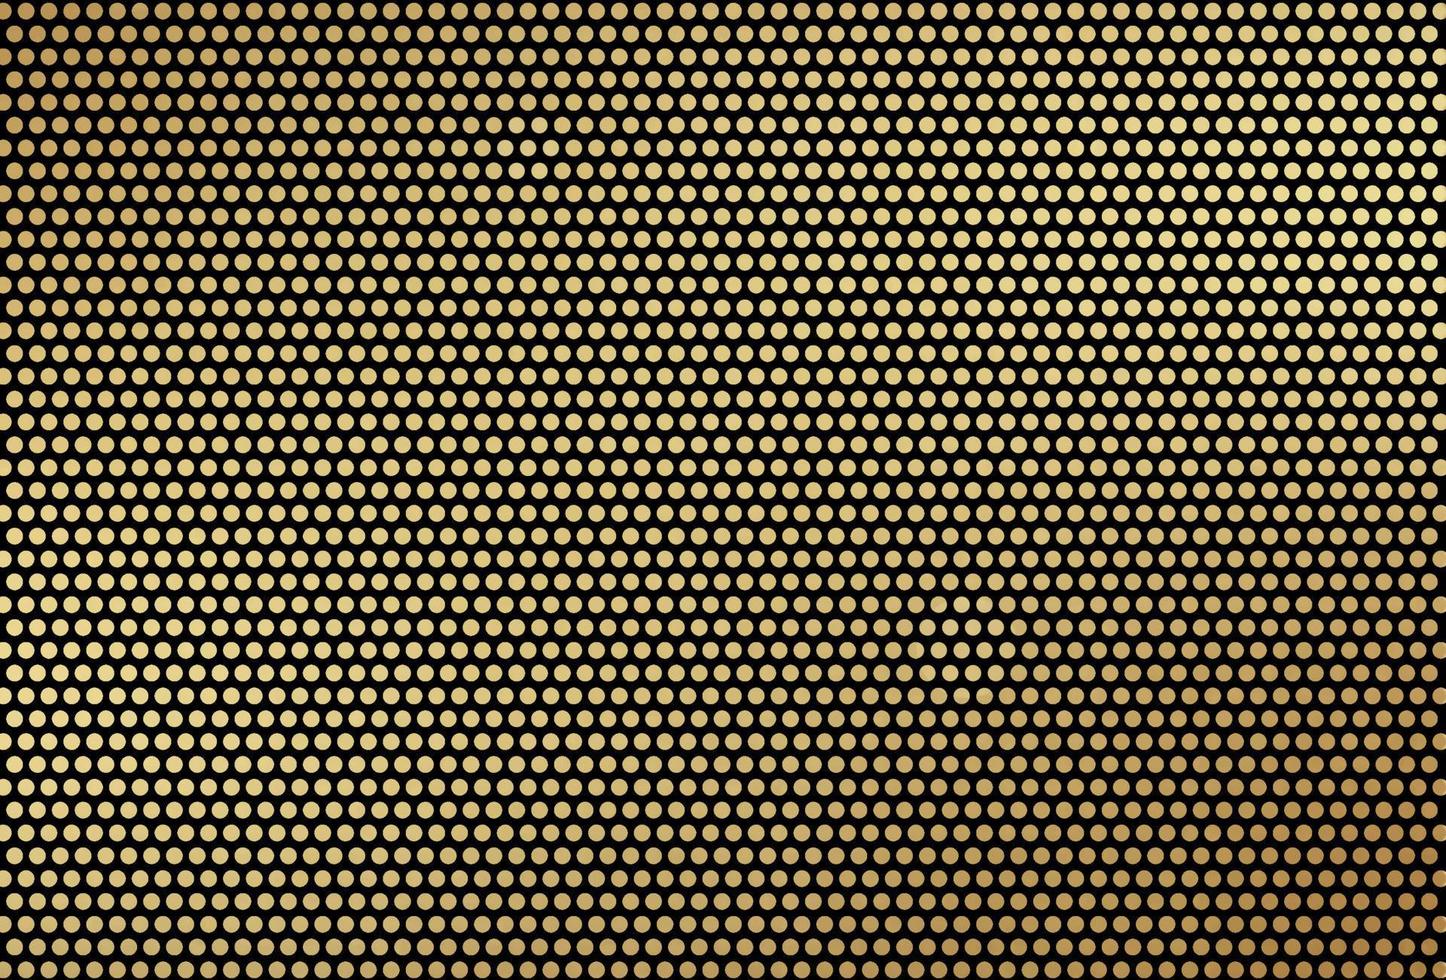 Polka dot gold Dust Texture. Shiny golden sequins background. Vector